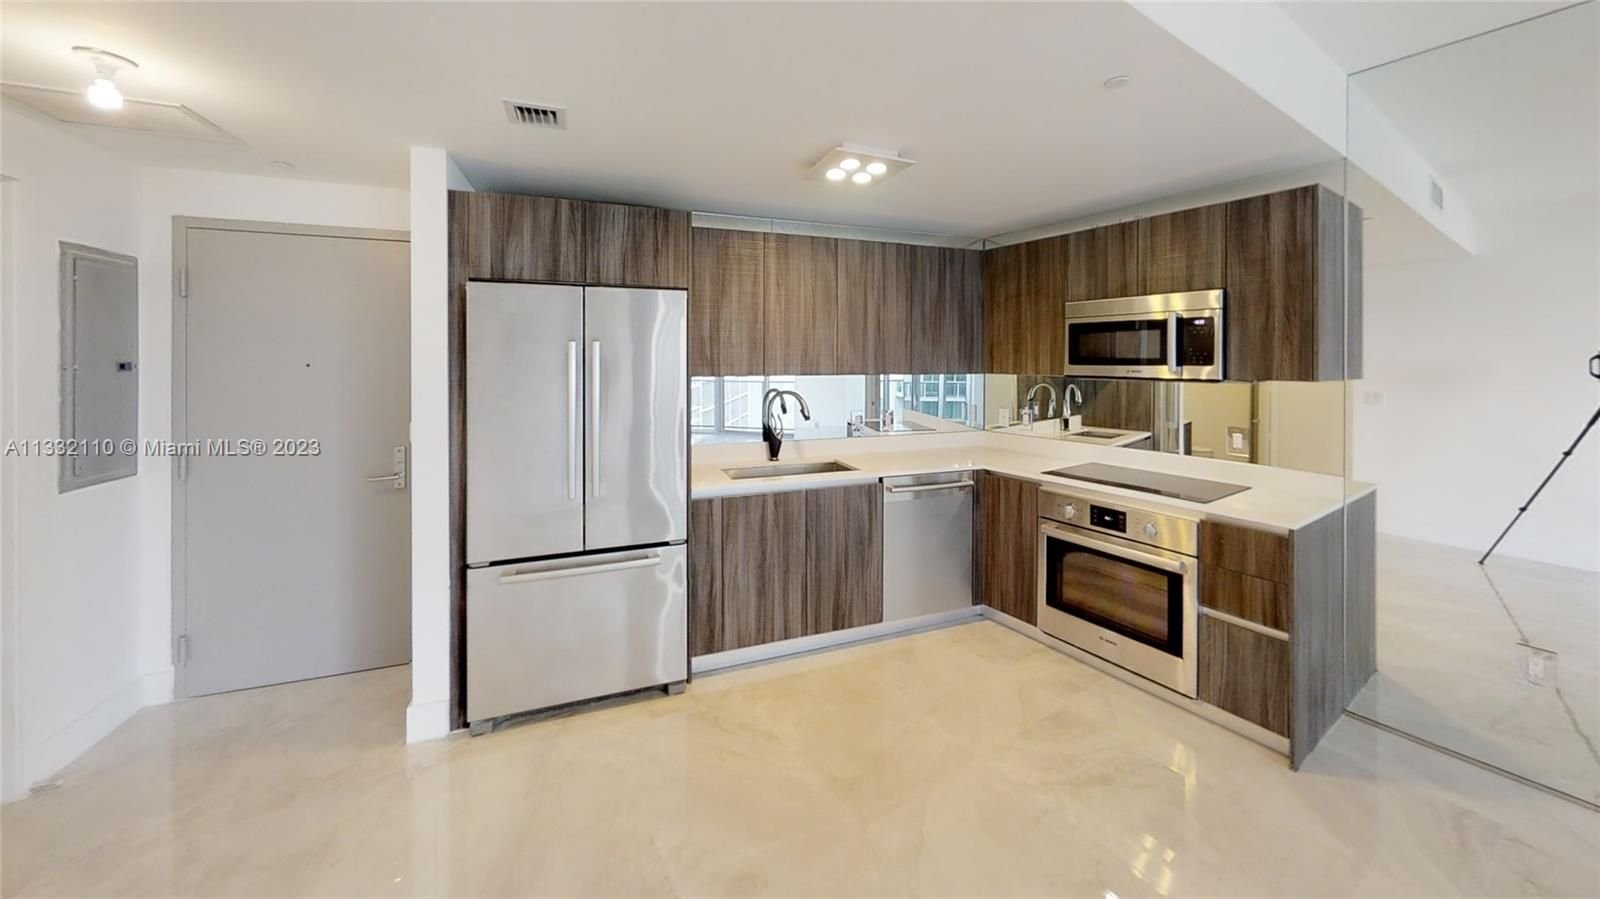 Real estate property located at 488 18th St #801, Miami-Dade County, Miami, FL